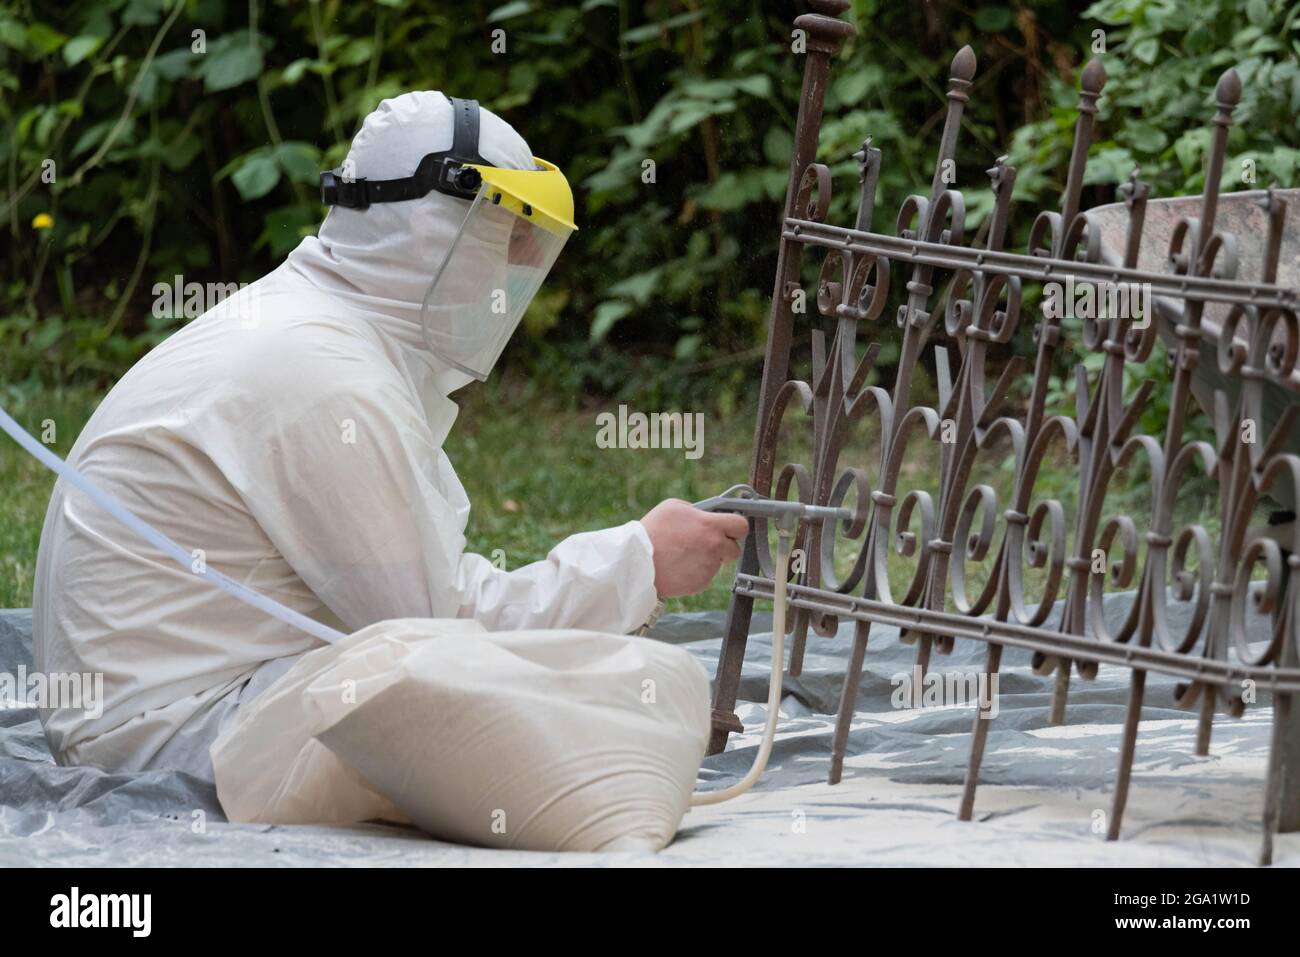 Sabbiatura di una vecchia recinzione metallica. Un uomo in una tuta bianca e una maschera antipolvere. Pulizia e restauro di elementi metallici, Foto Stock